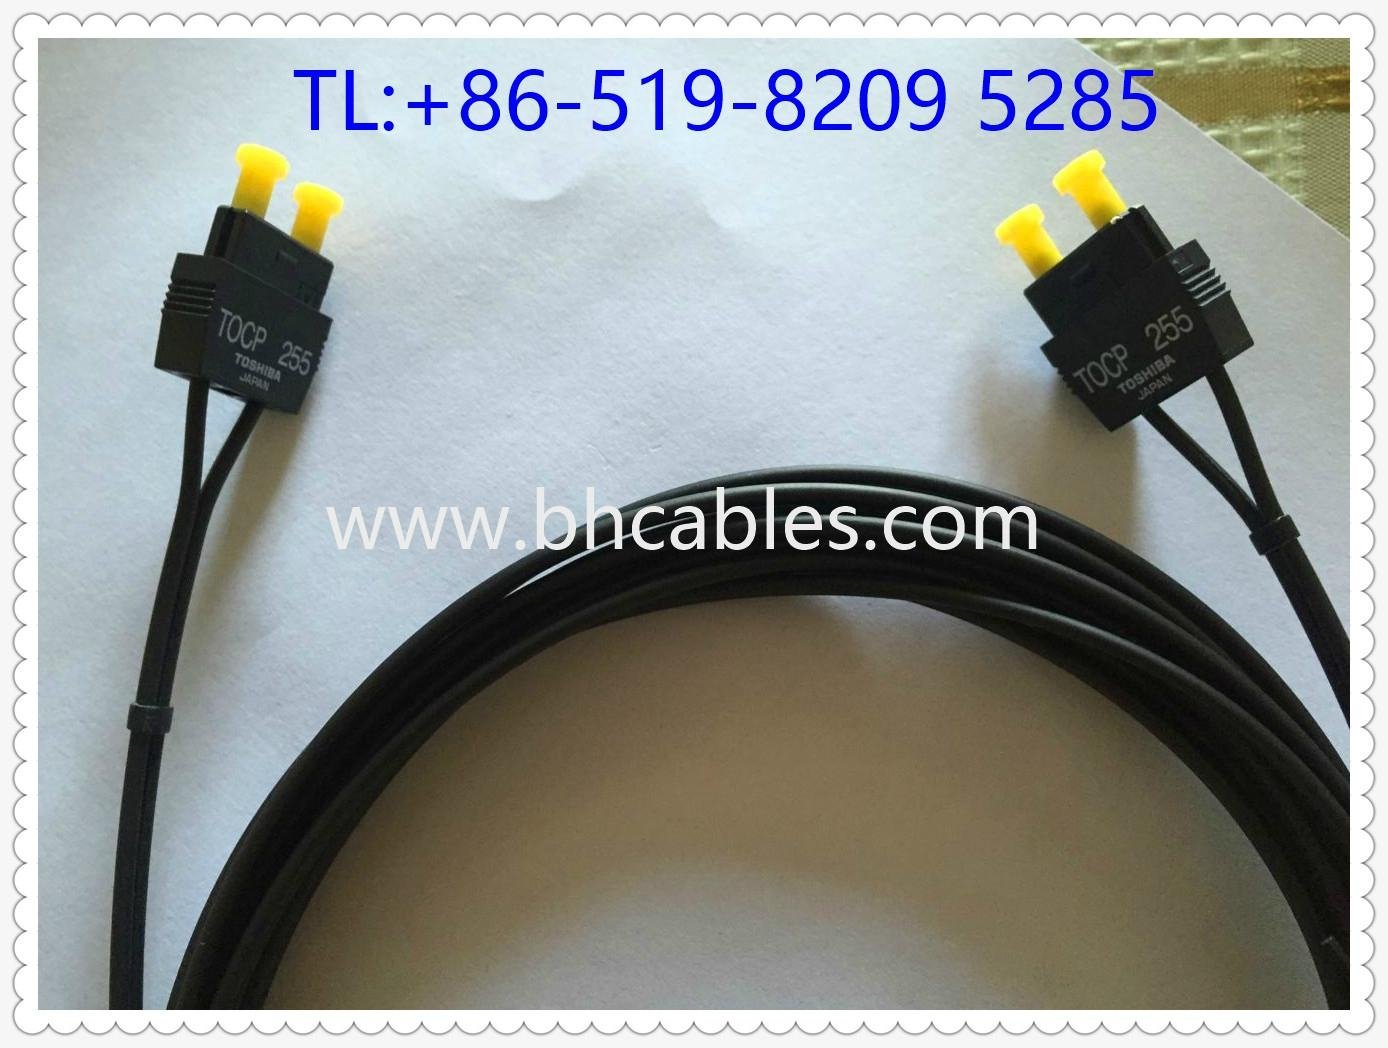 TOCP 255 Toshiba Fiber Optical Cable